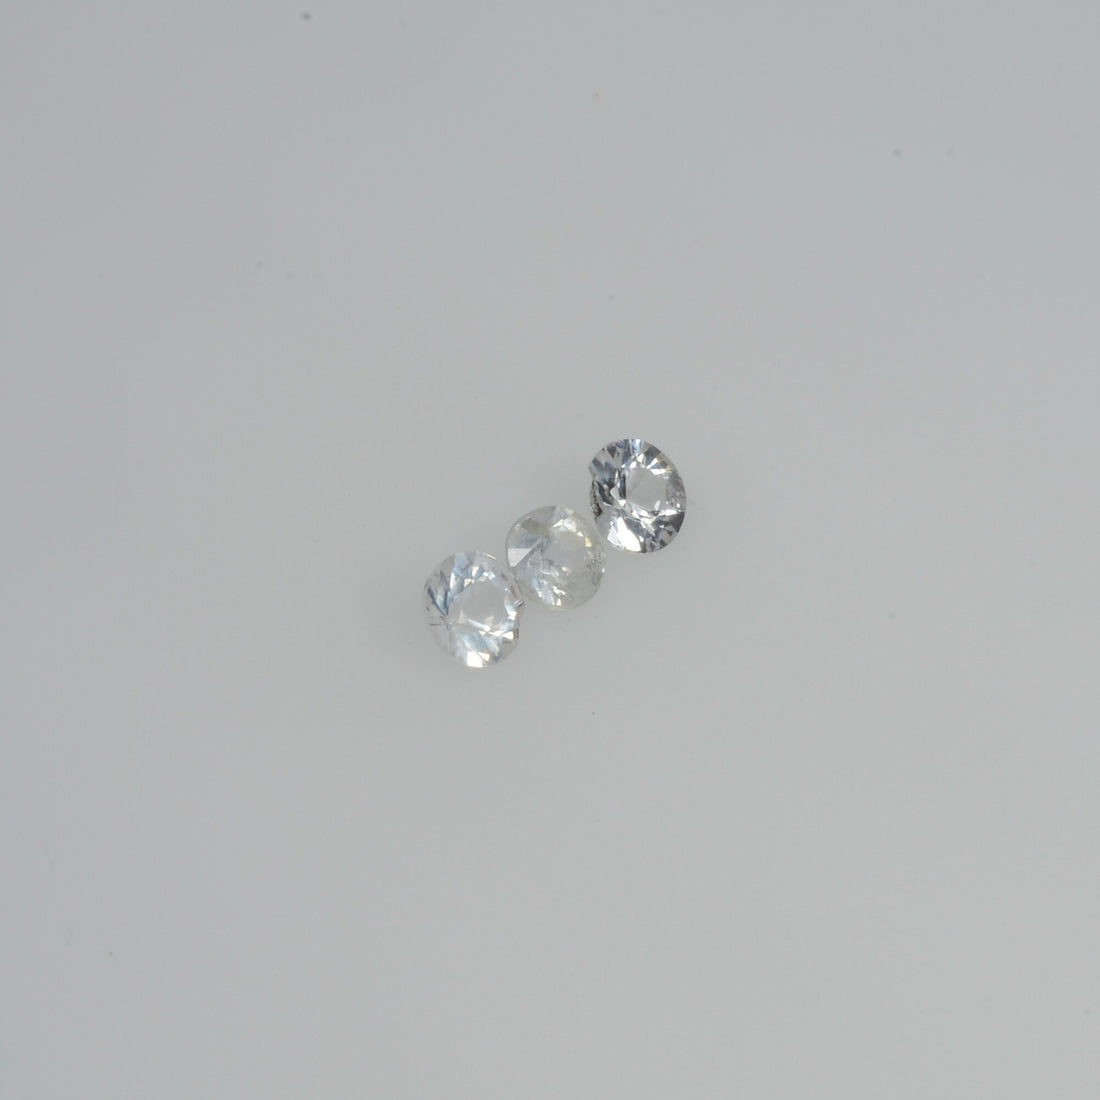 1.5-3.0 mm Natural Yellowish white Sapphire Loose Vs Quality Gemstone Round Diamond Cut